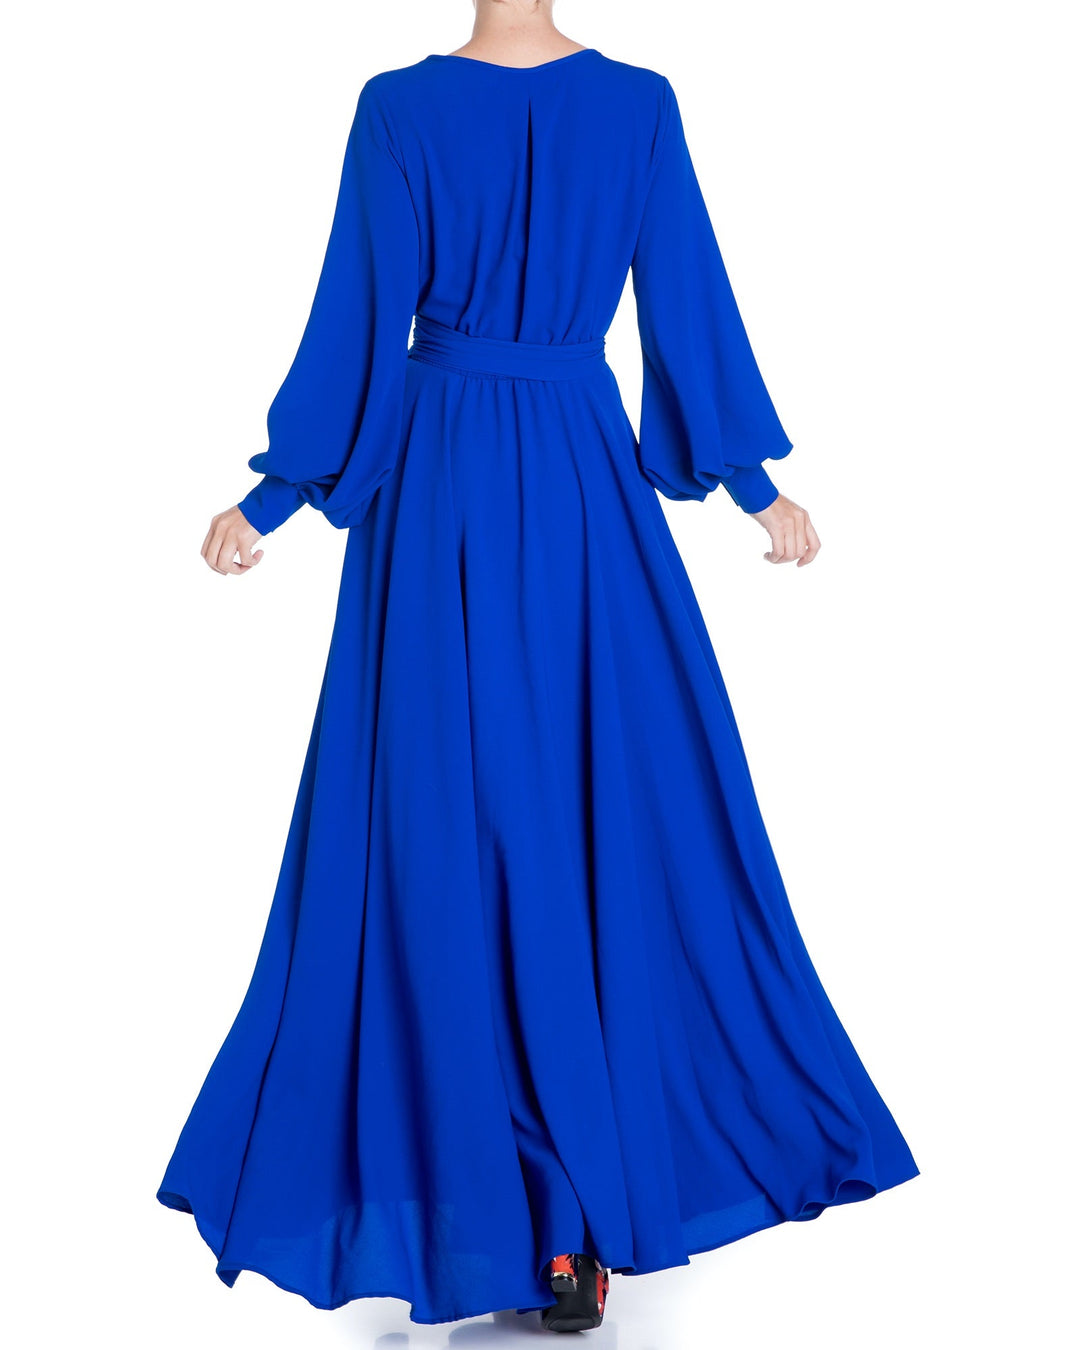 LilyPad Maxi Dress - Royal by Meghan Fabulous